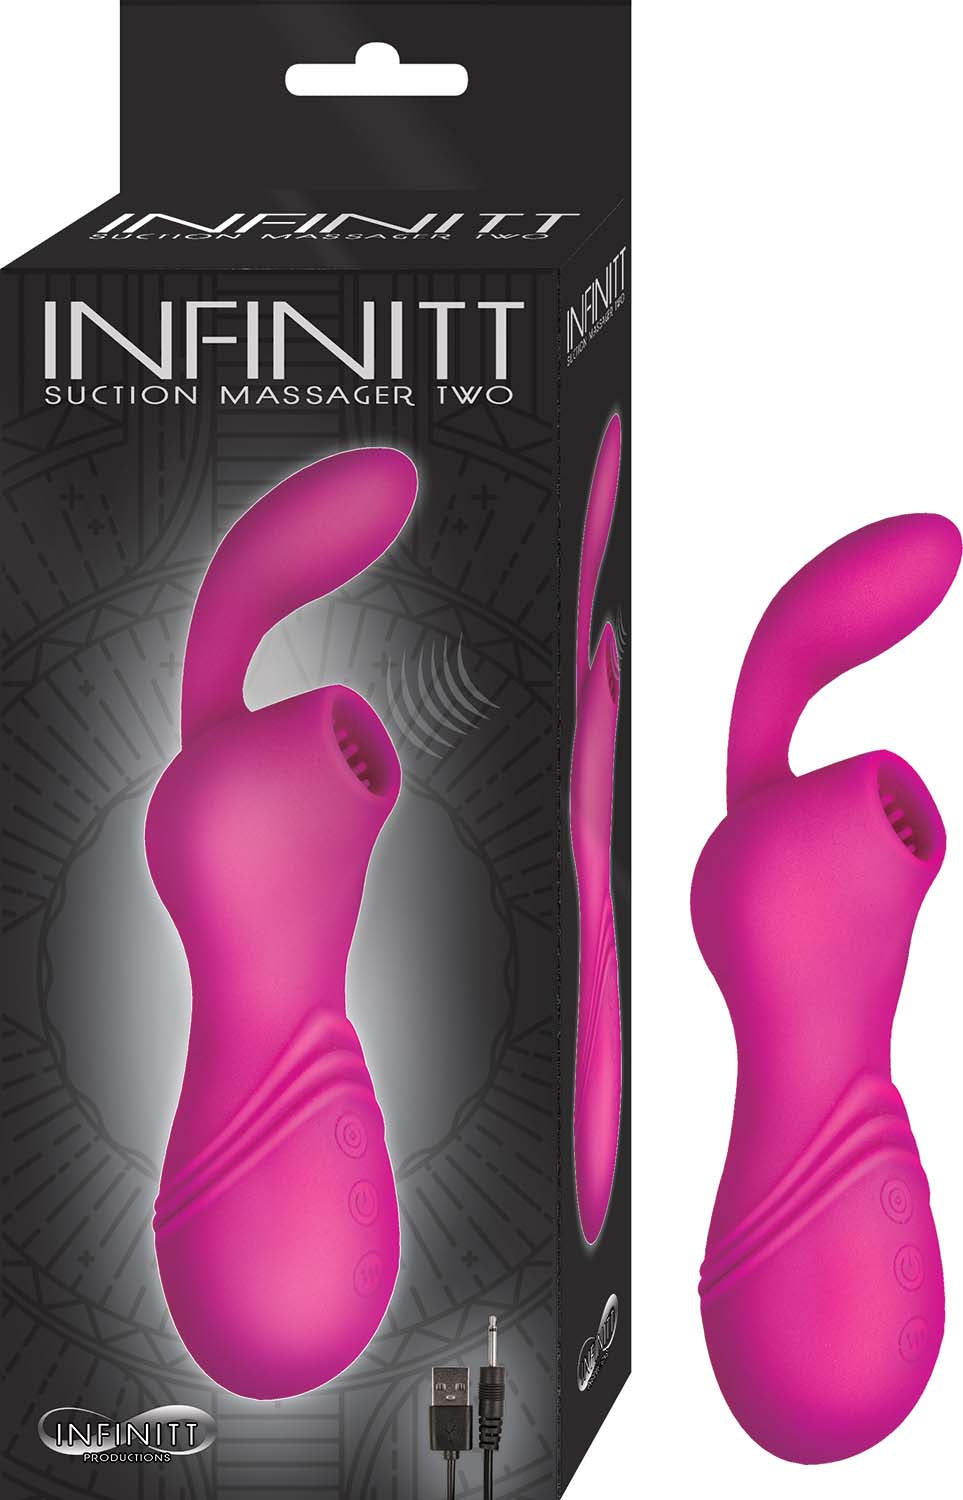 Infinitt Suction Massager Two - Pink NW2825-1